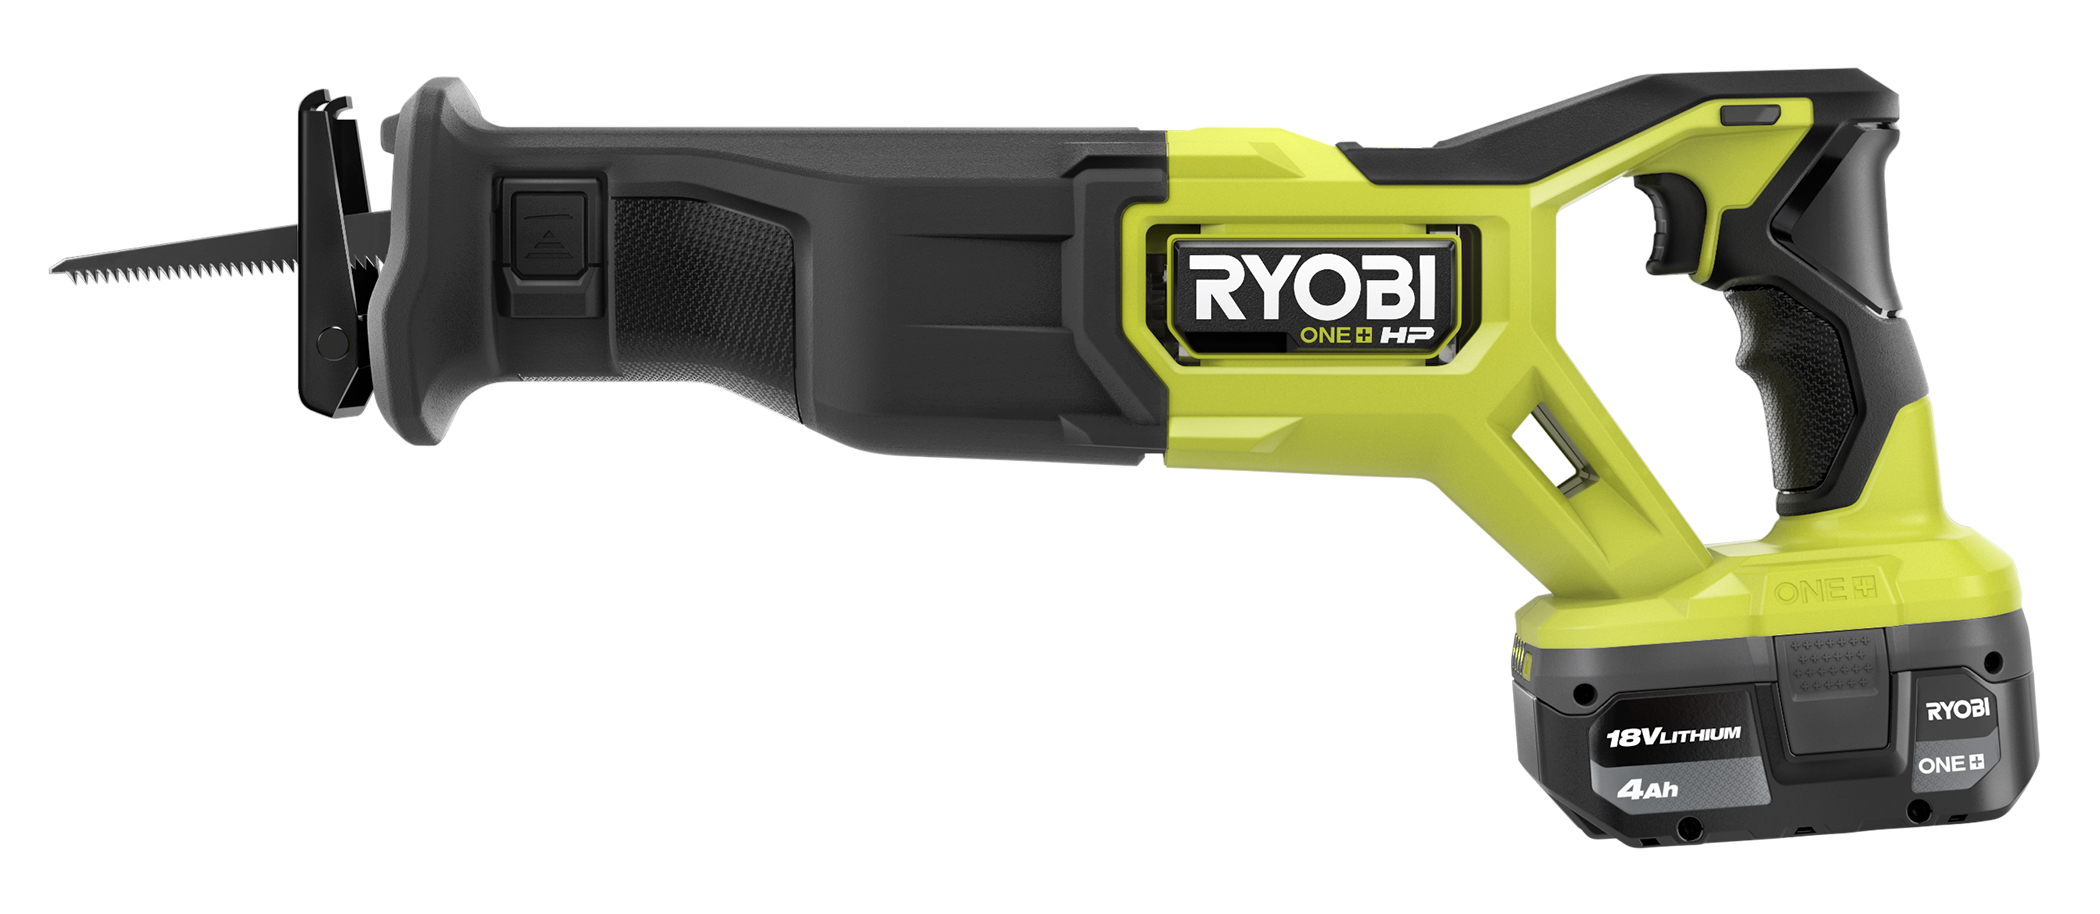 18V ONE+ RECIPROCATING SAW - RYOBI Tools